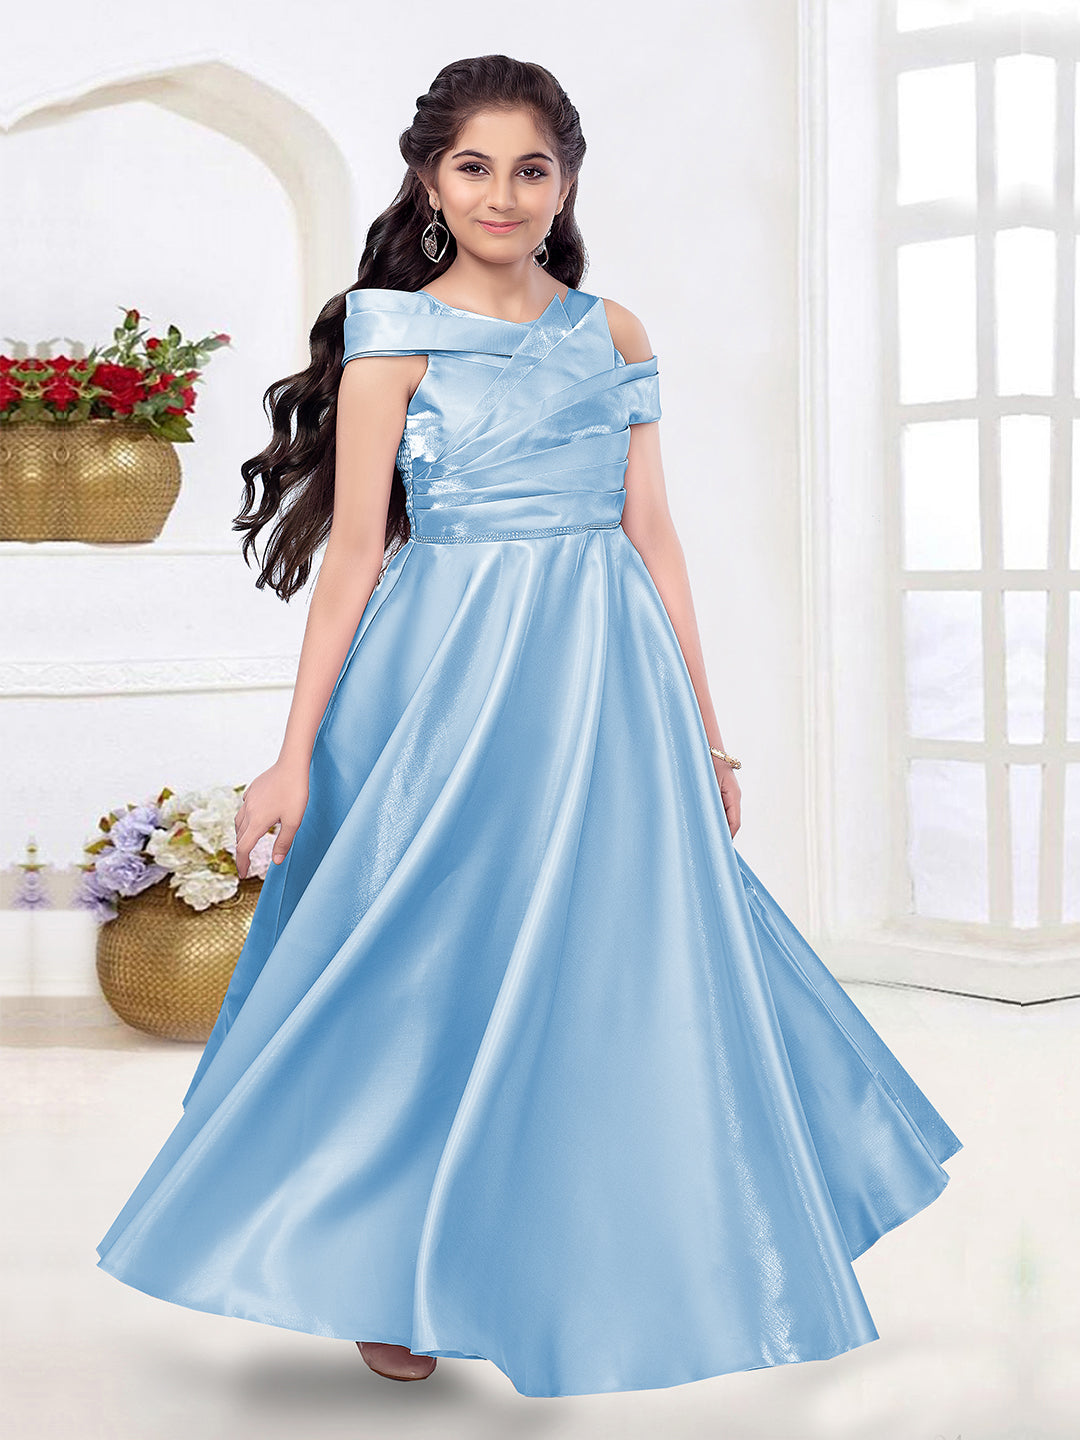 Aqua blue - mint blue - sky blue beaded sparkle ball gown wedding dress  with train & glitter tulle - various styles